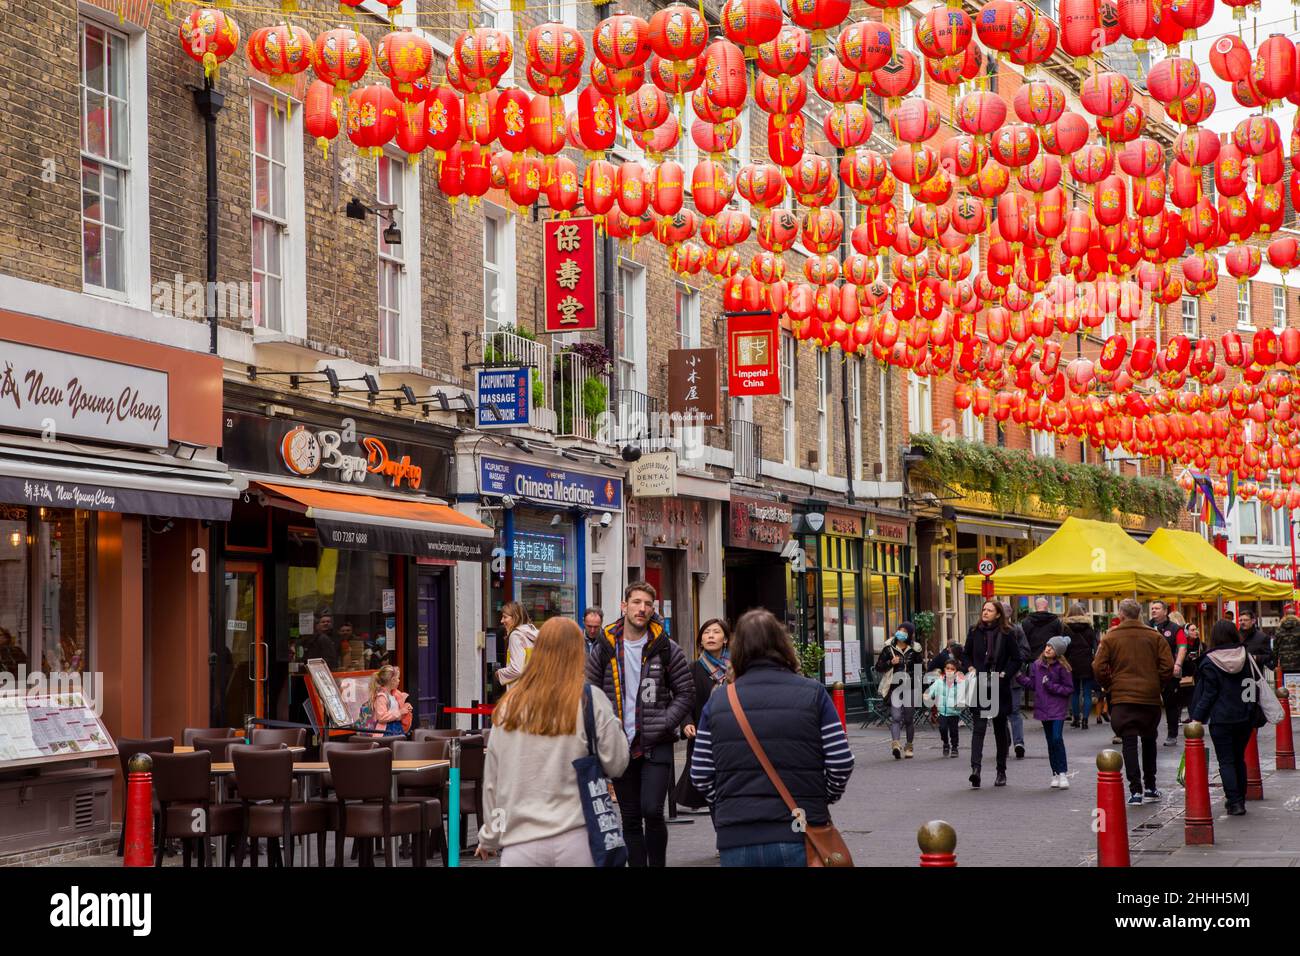 Lisle Street in China town, London Stock Photo